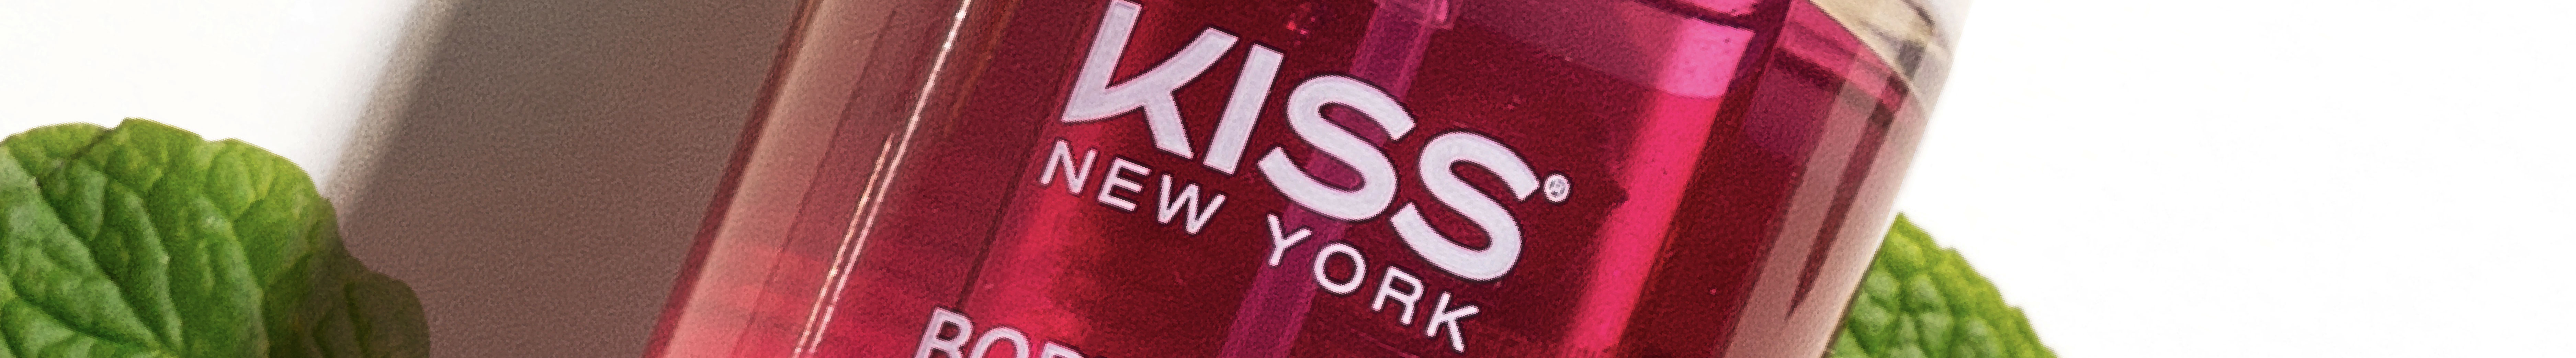 KISS NEW YORK